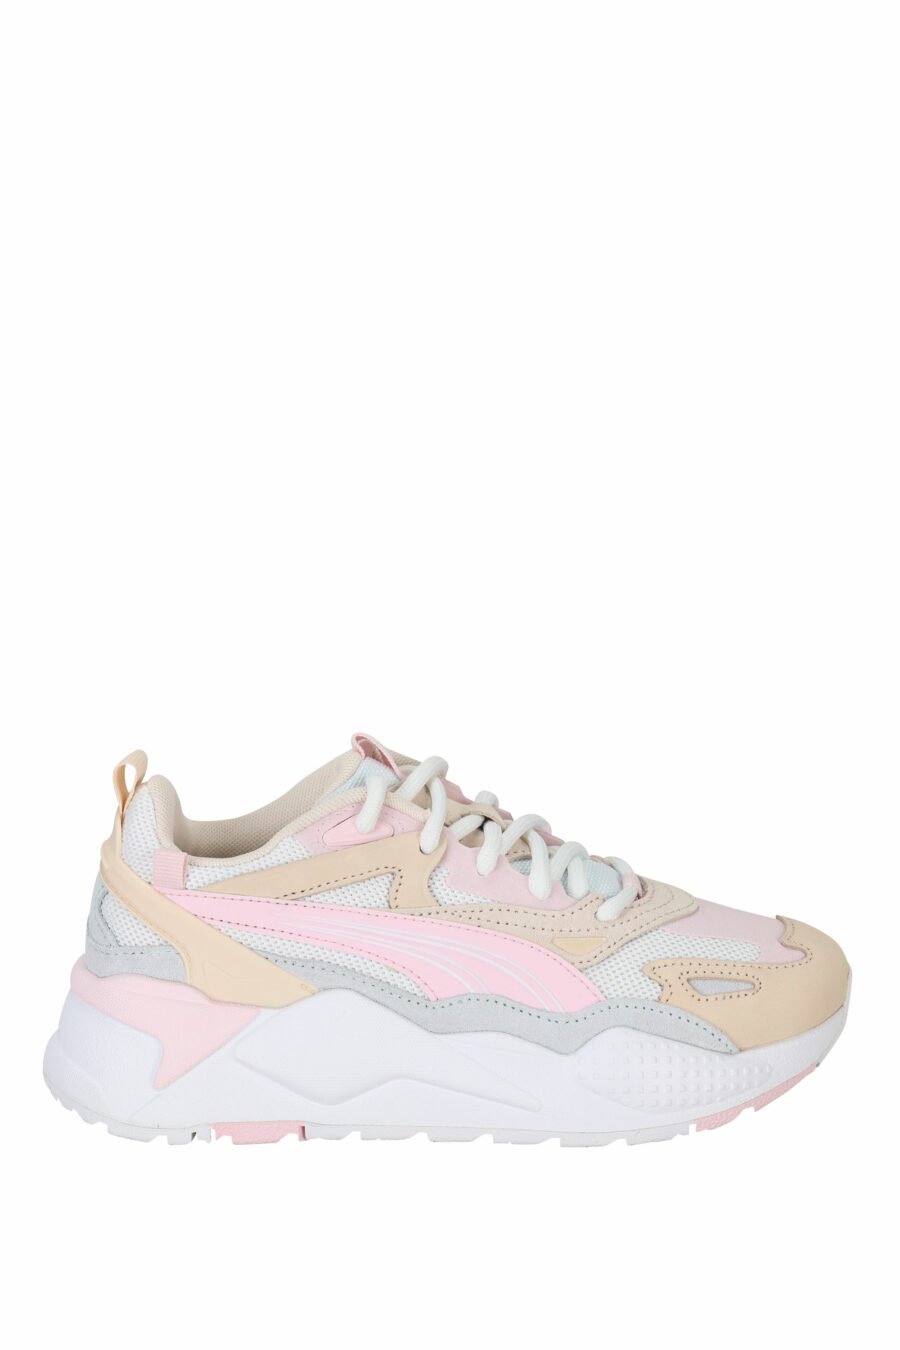 Zapatillas blancas con rosa "RS-X" con logo - 4099685804900